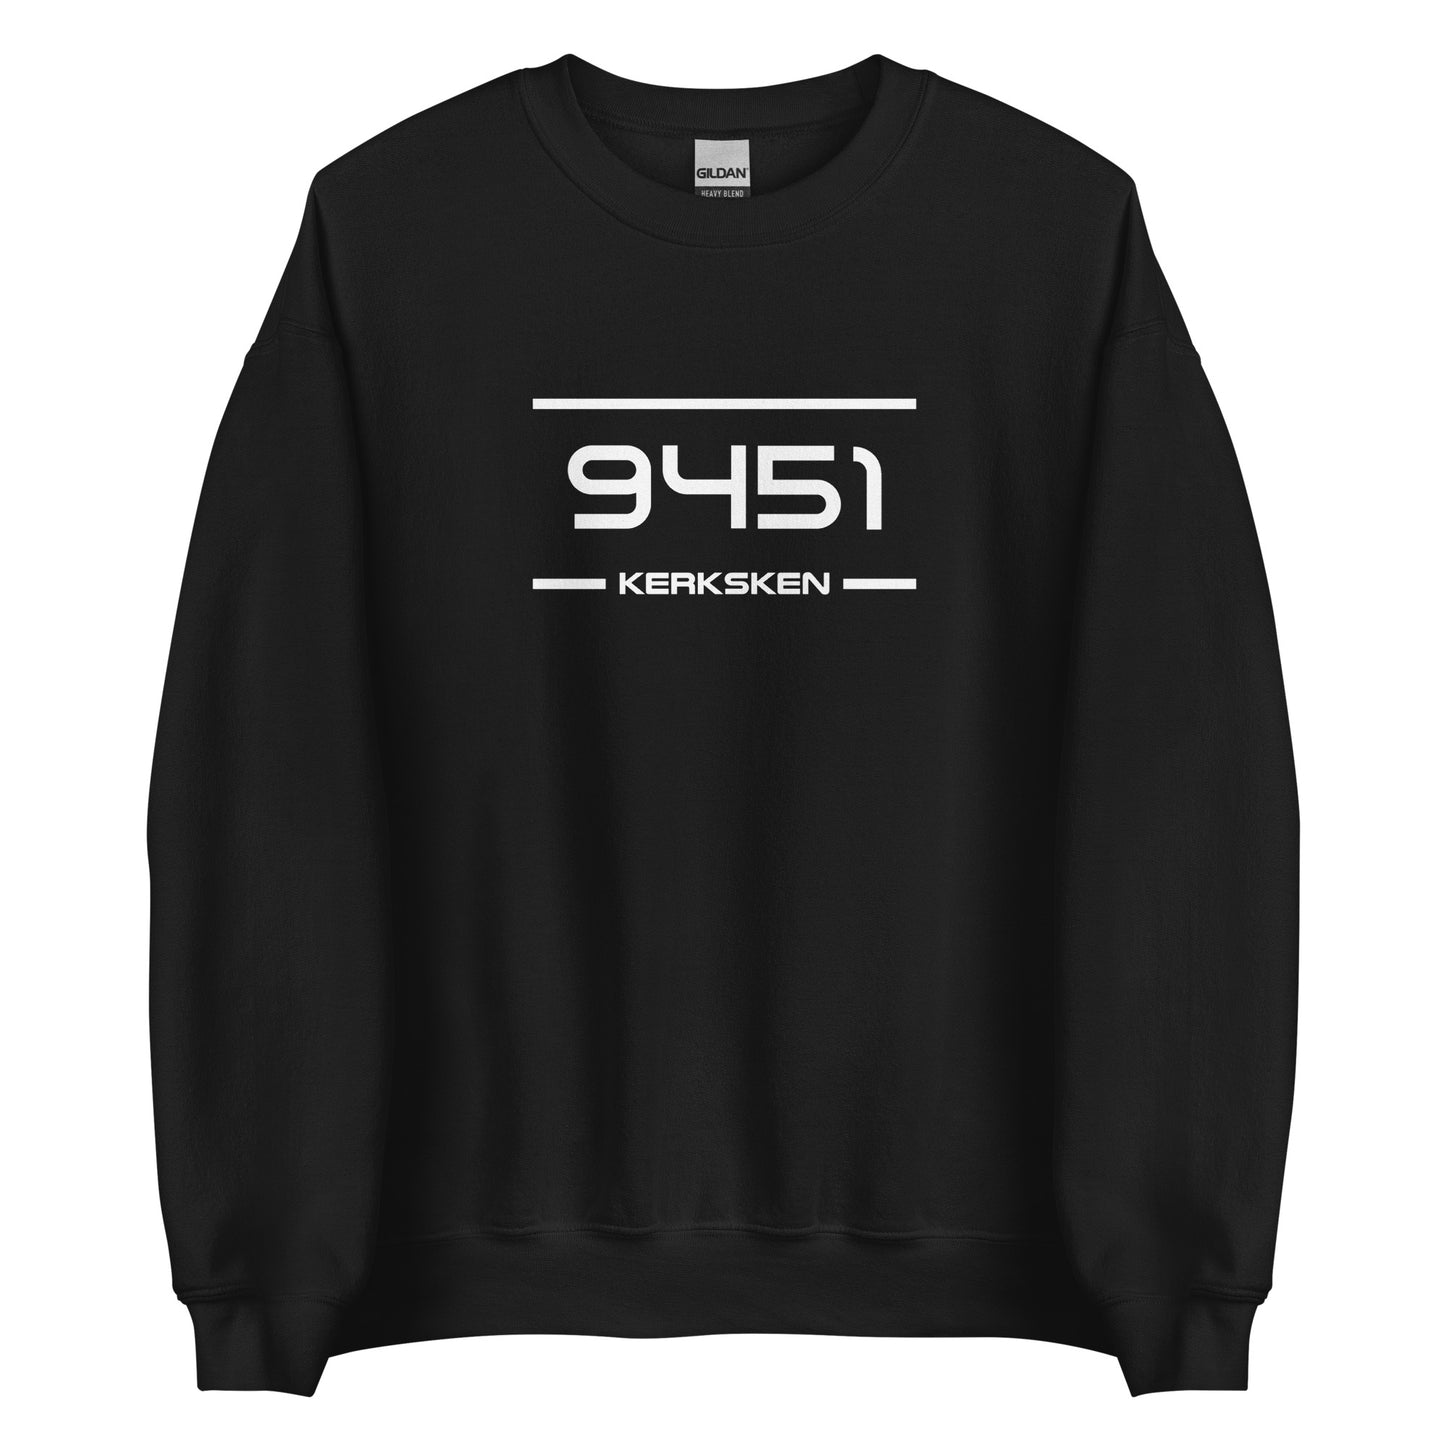 Sweater - 9451 - Kerksken (M/V)